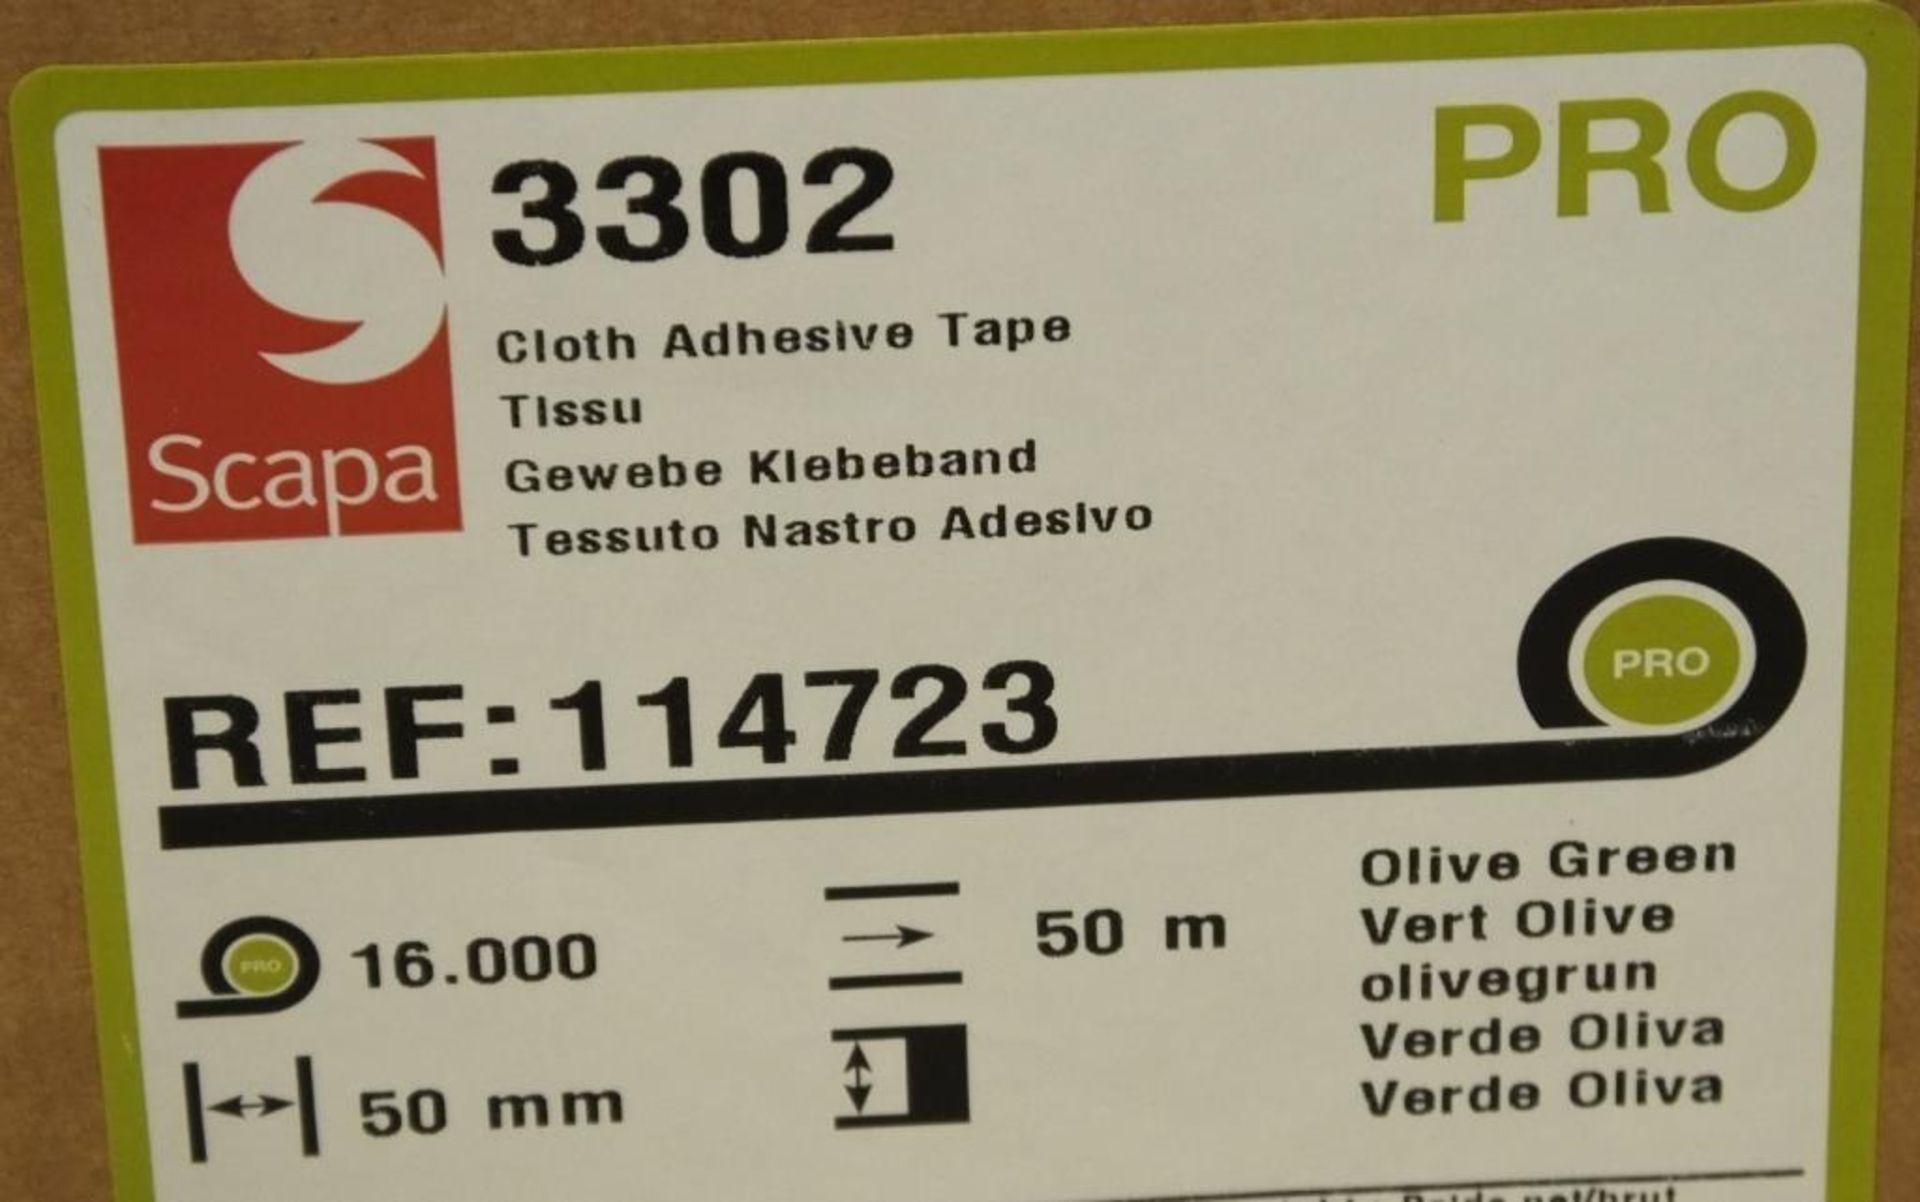 Scapa 3302 Pro Tape - Olive Green - 50mm x 50M rolls - 16 rolls per box - 1 box - Image 3 of 5